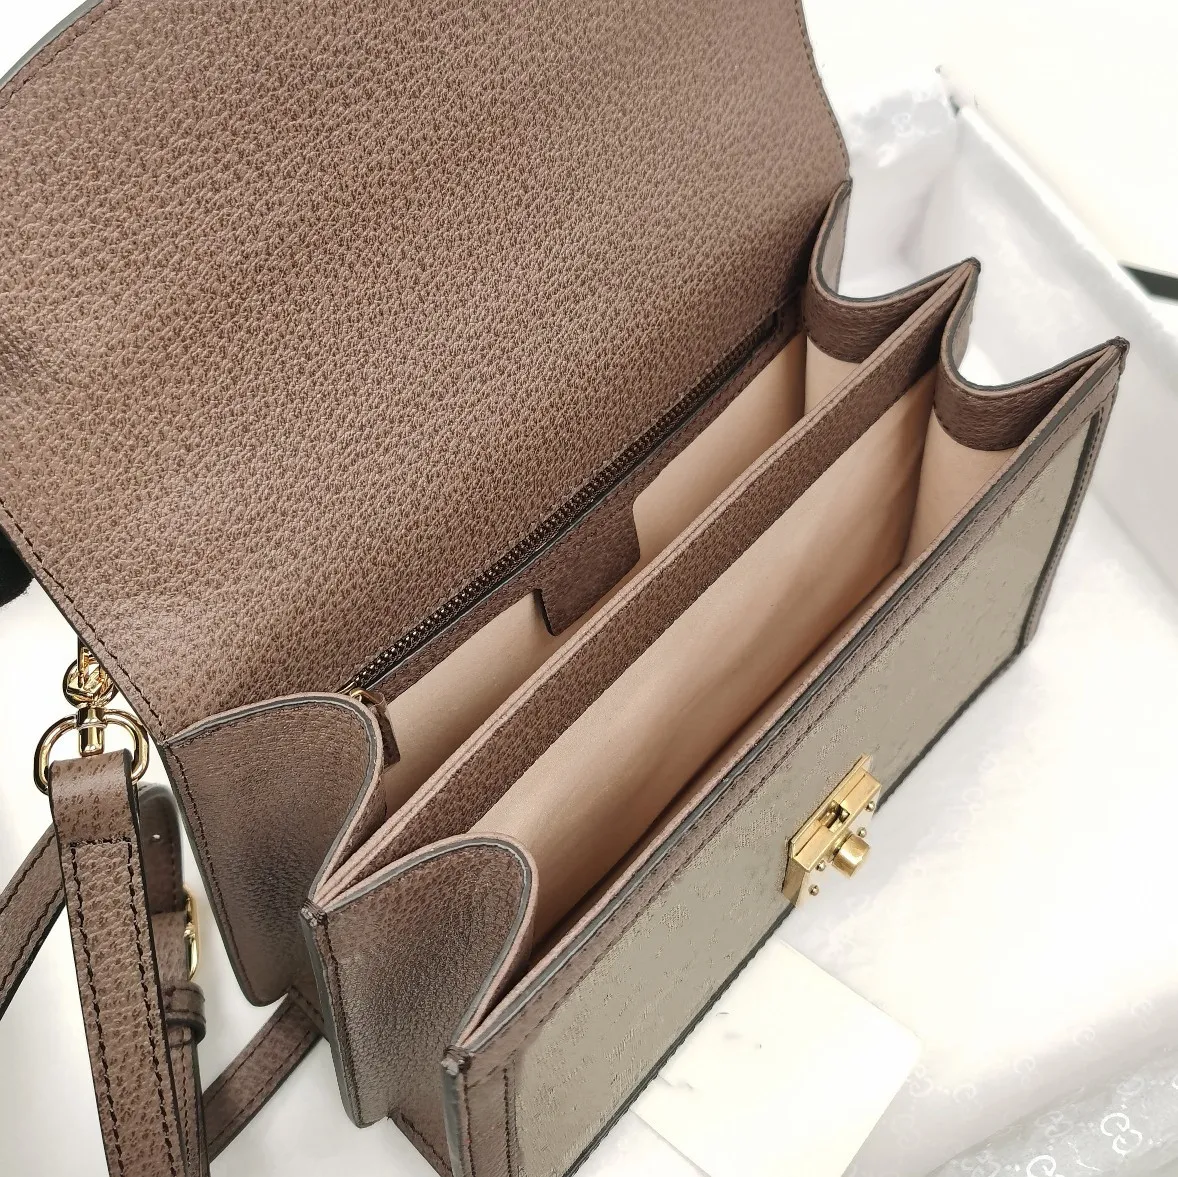 handbags Purse Gift Bag Leather Luxury Handbag Purse Women Bags Women Messenger Bags Woman Bags for Women Handbags with Go